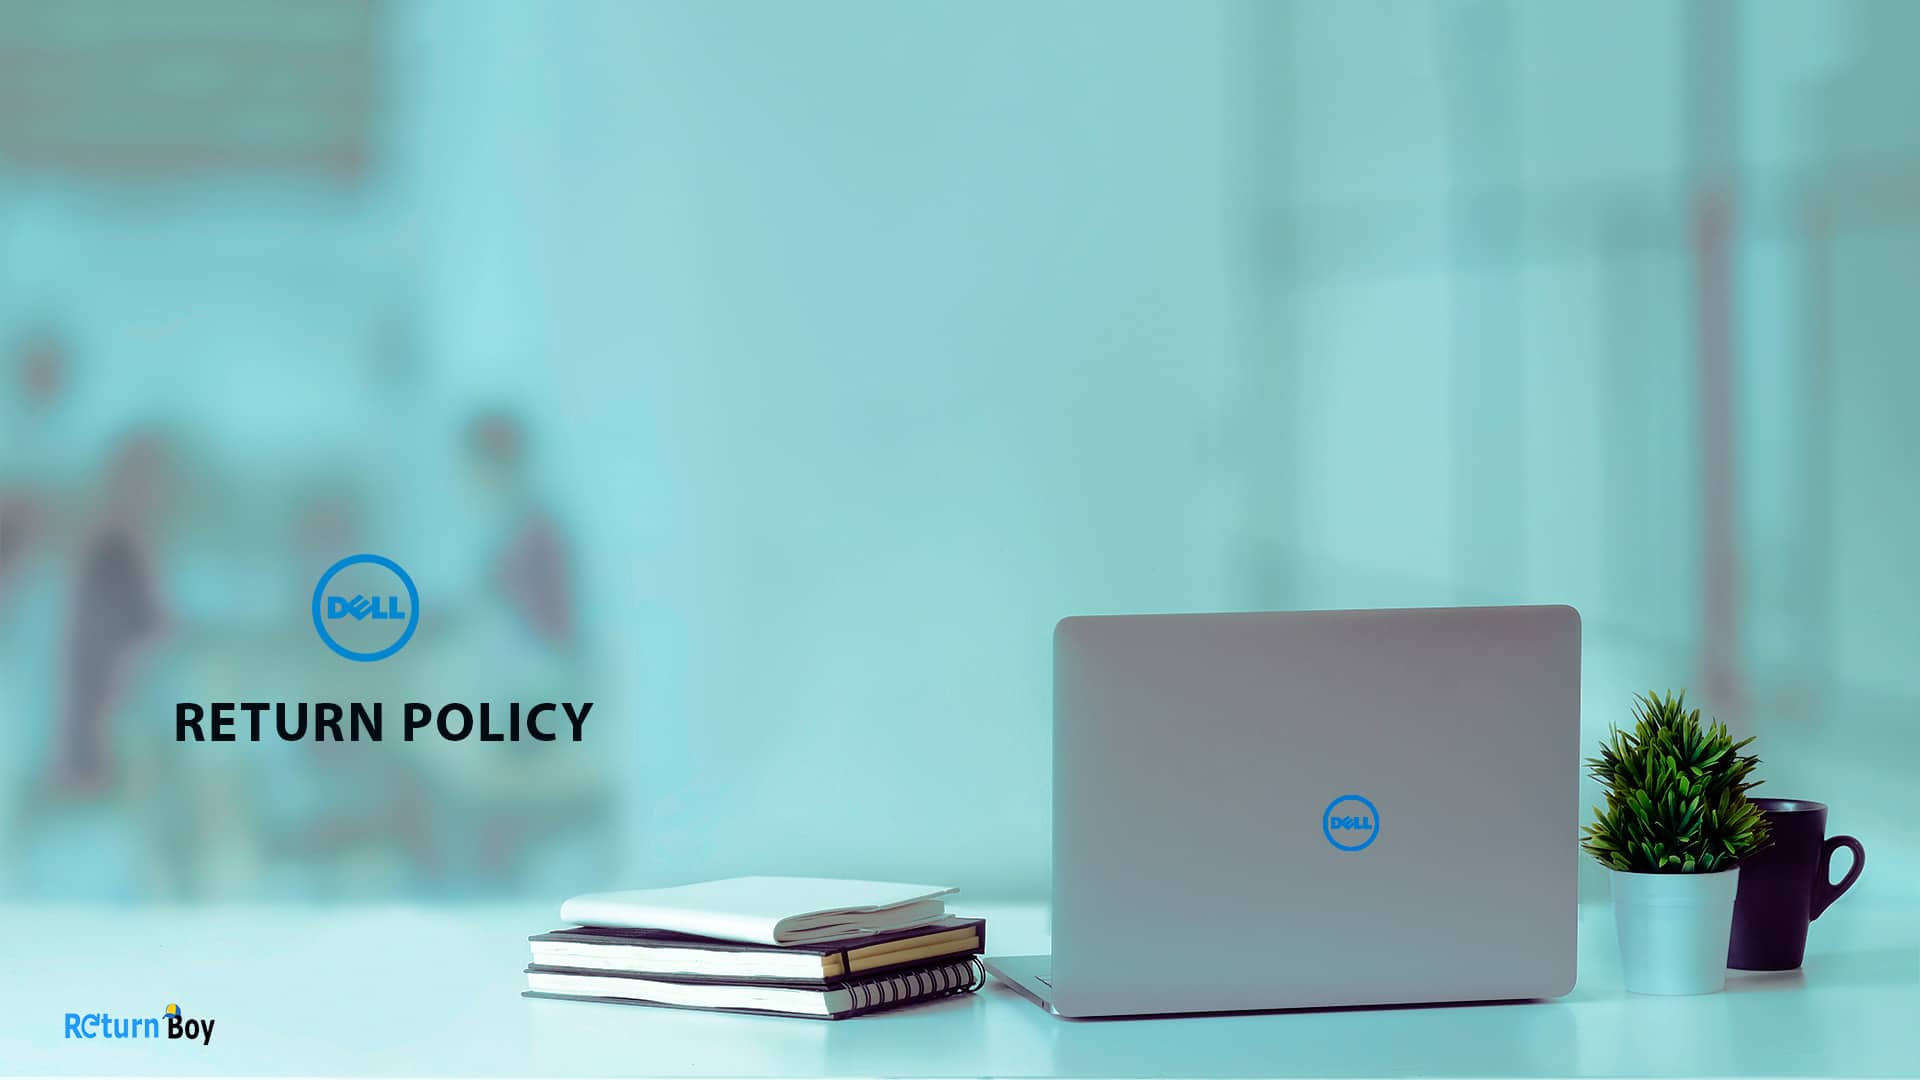 Dell Return Policy